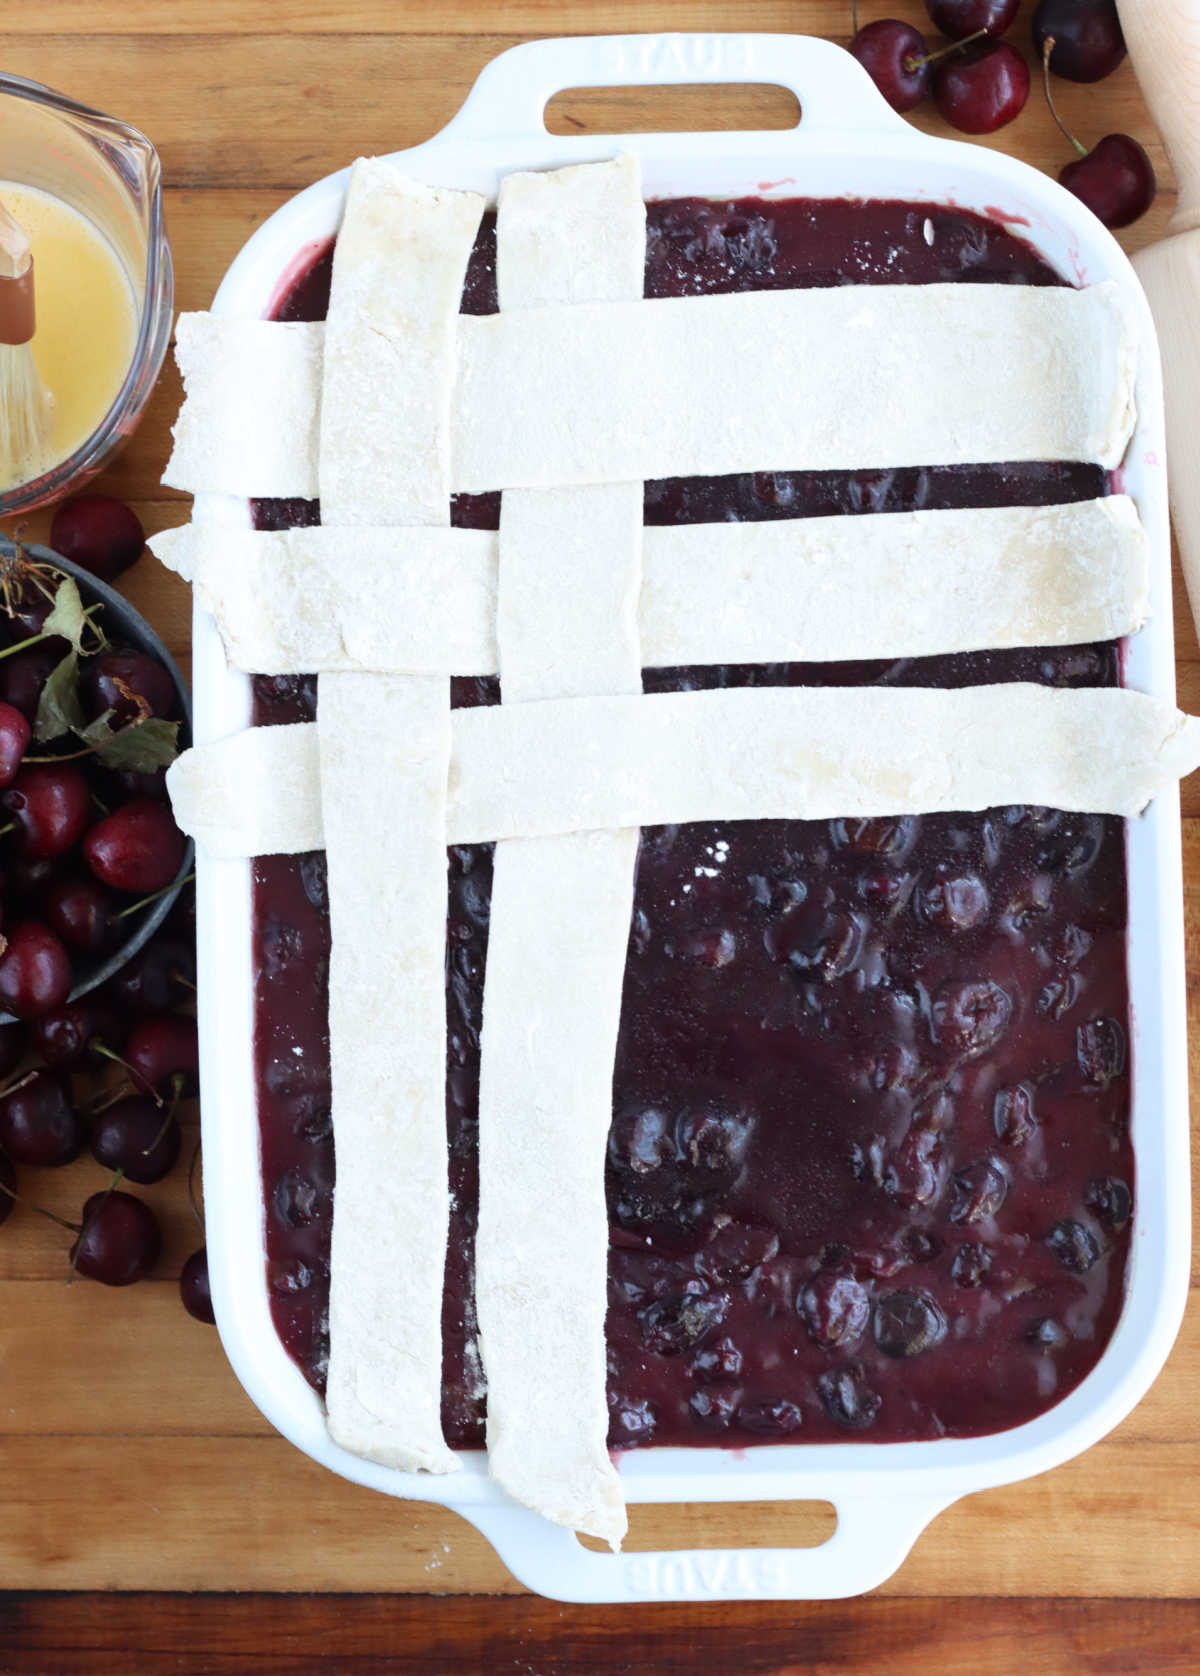 Weaving lattice pie crust on cherry cobbler in white rectangle baking dish.